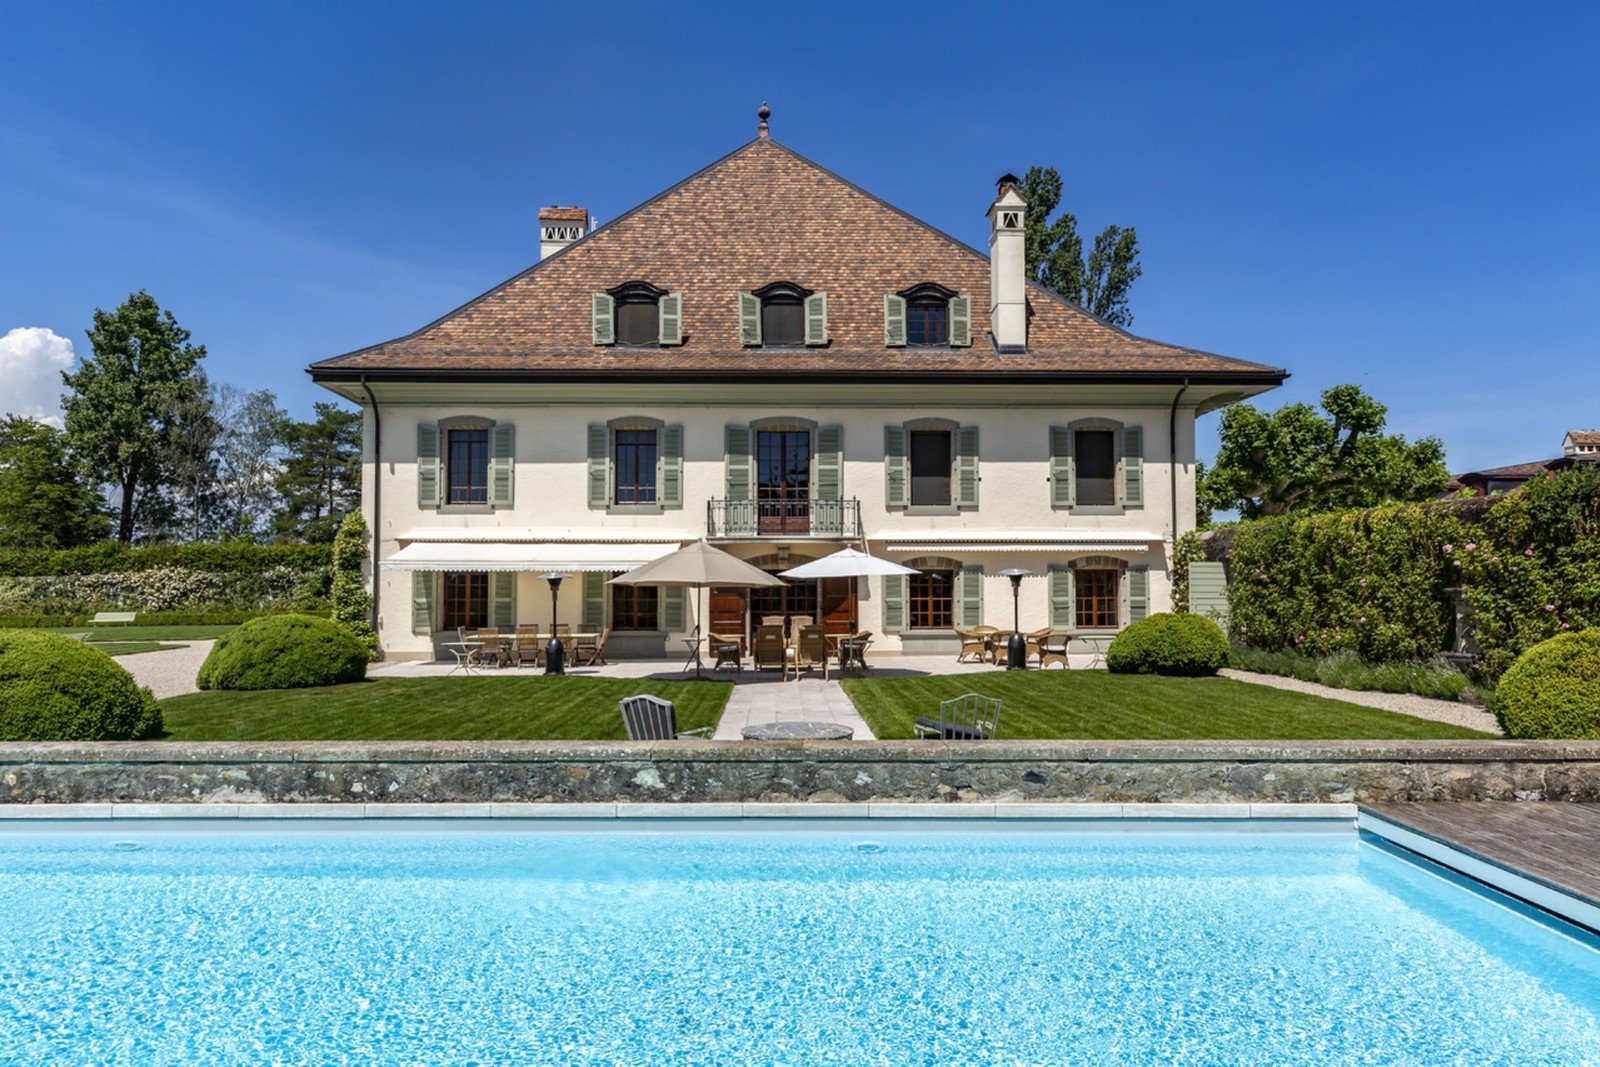 Francis+York+ Royal Estate Merlinge Castle in Switzerland  00005.jpeg